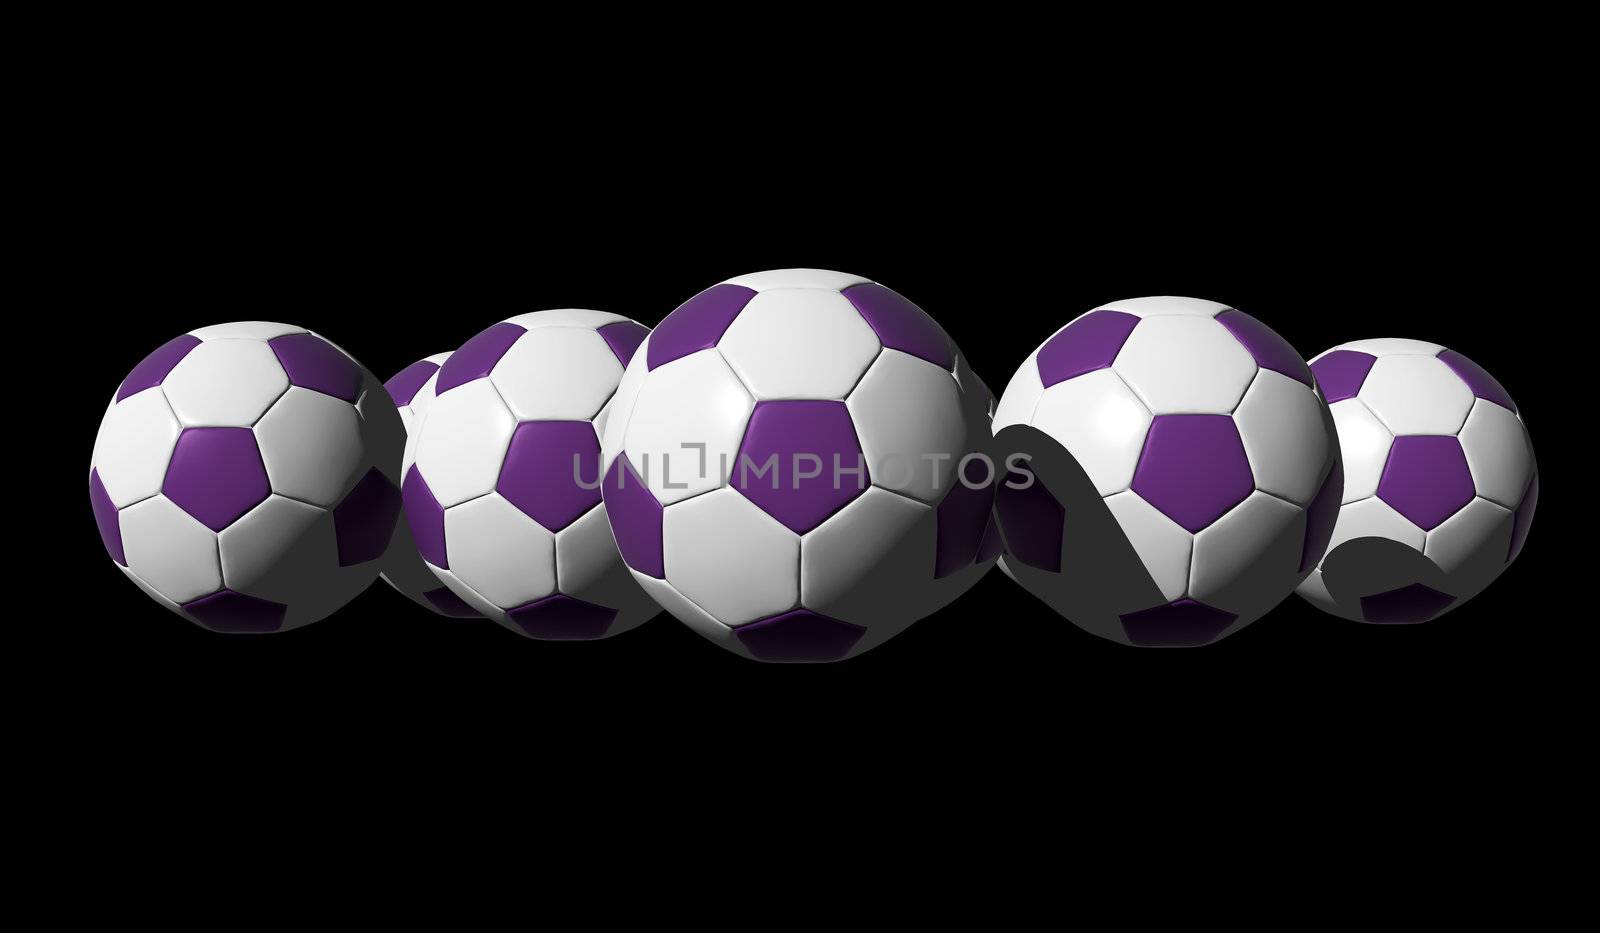 3D rendered purple soccer balls  by siraanamwong